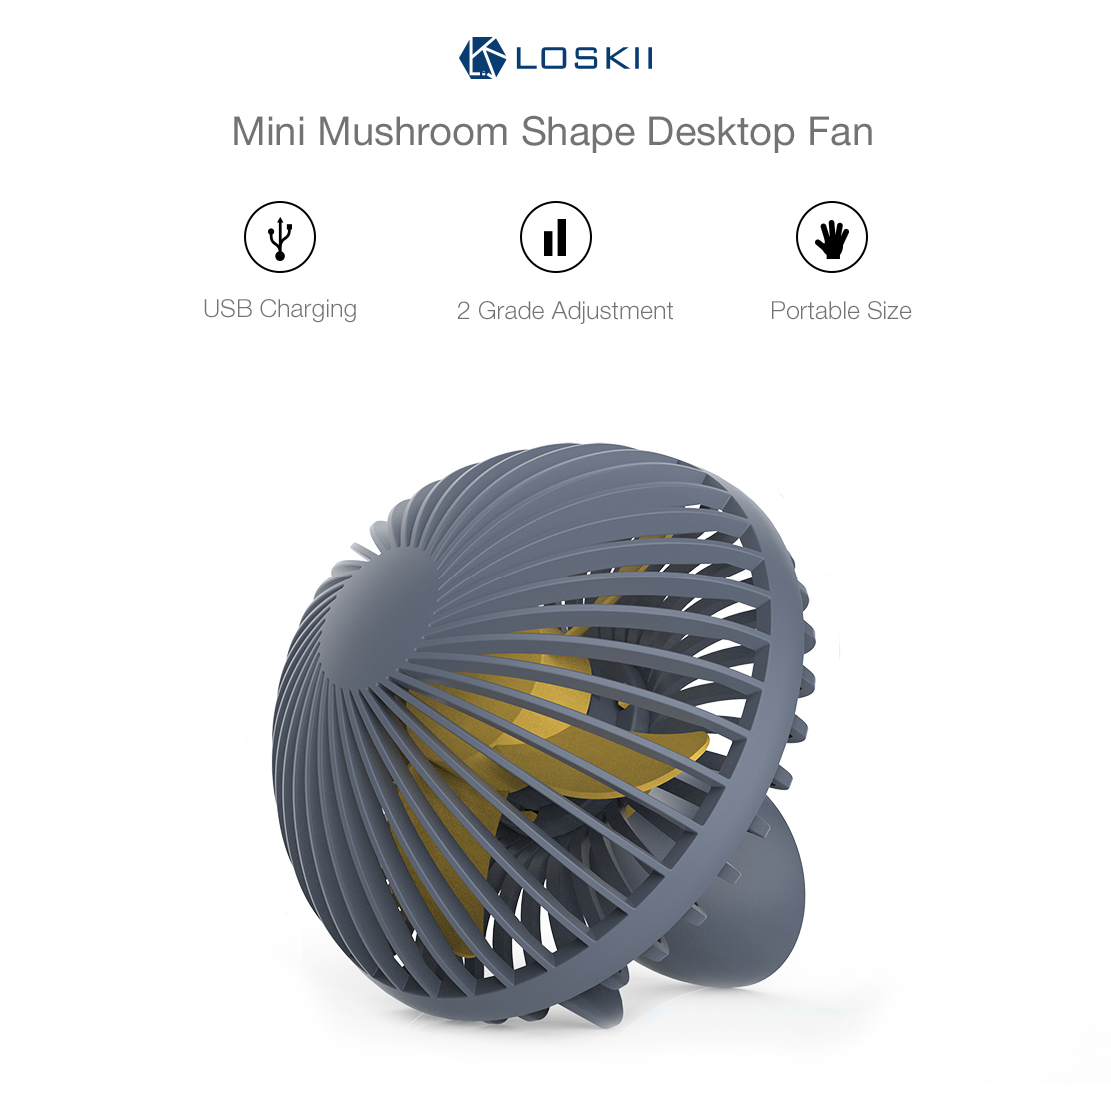 Loskii HF-200 Portable Mini Electronic Desktop Mushroom Shape Summer Cooling Fan 2 Grade Adjustment USB Charging Fan 8